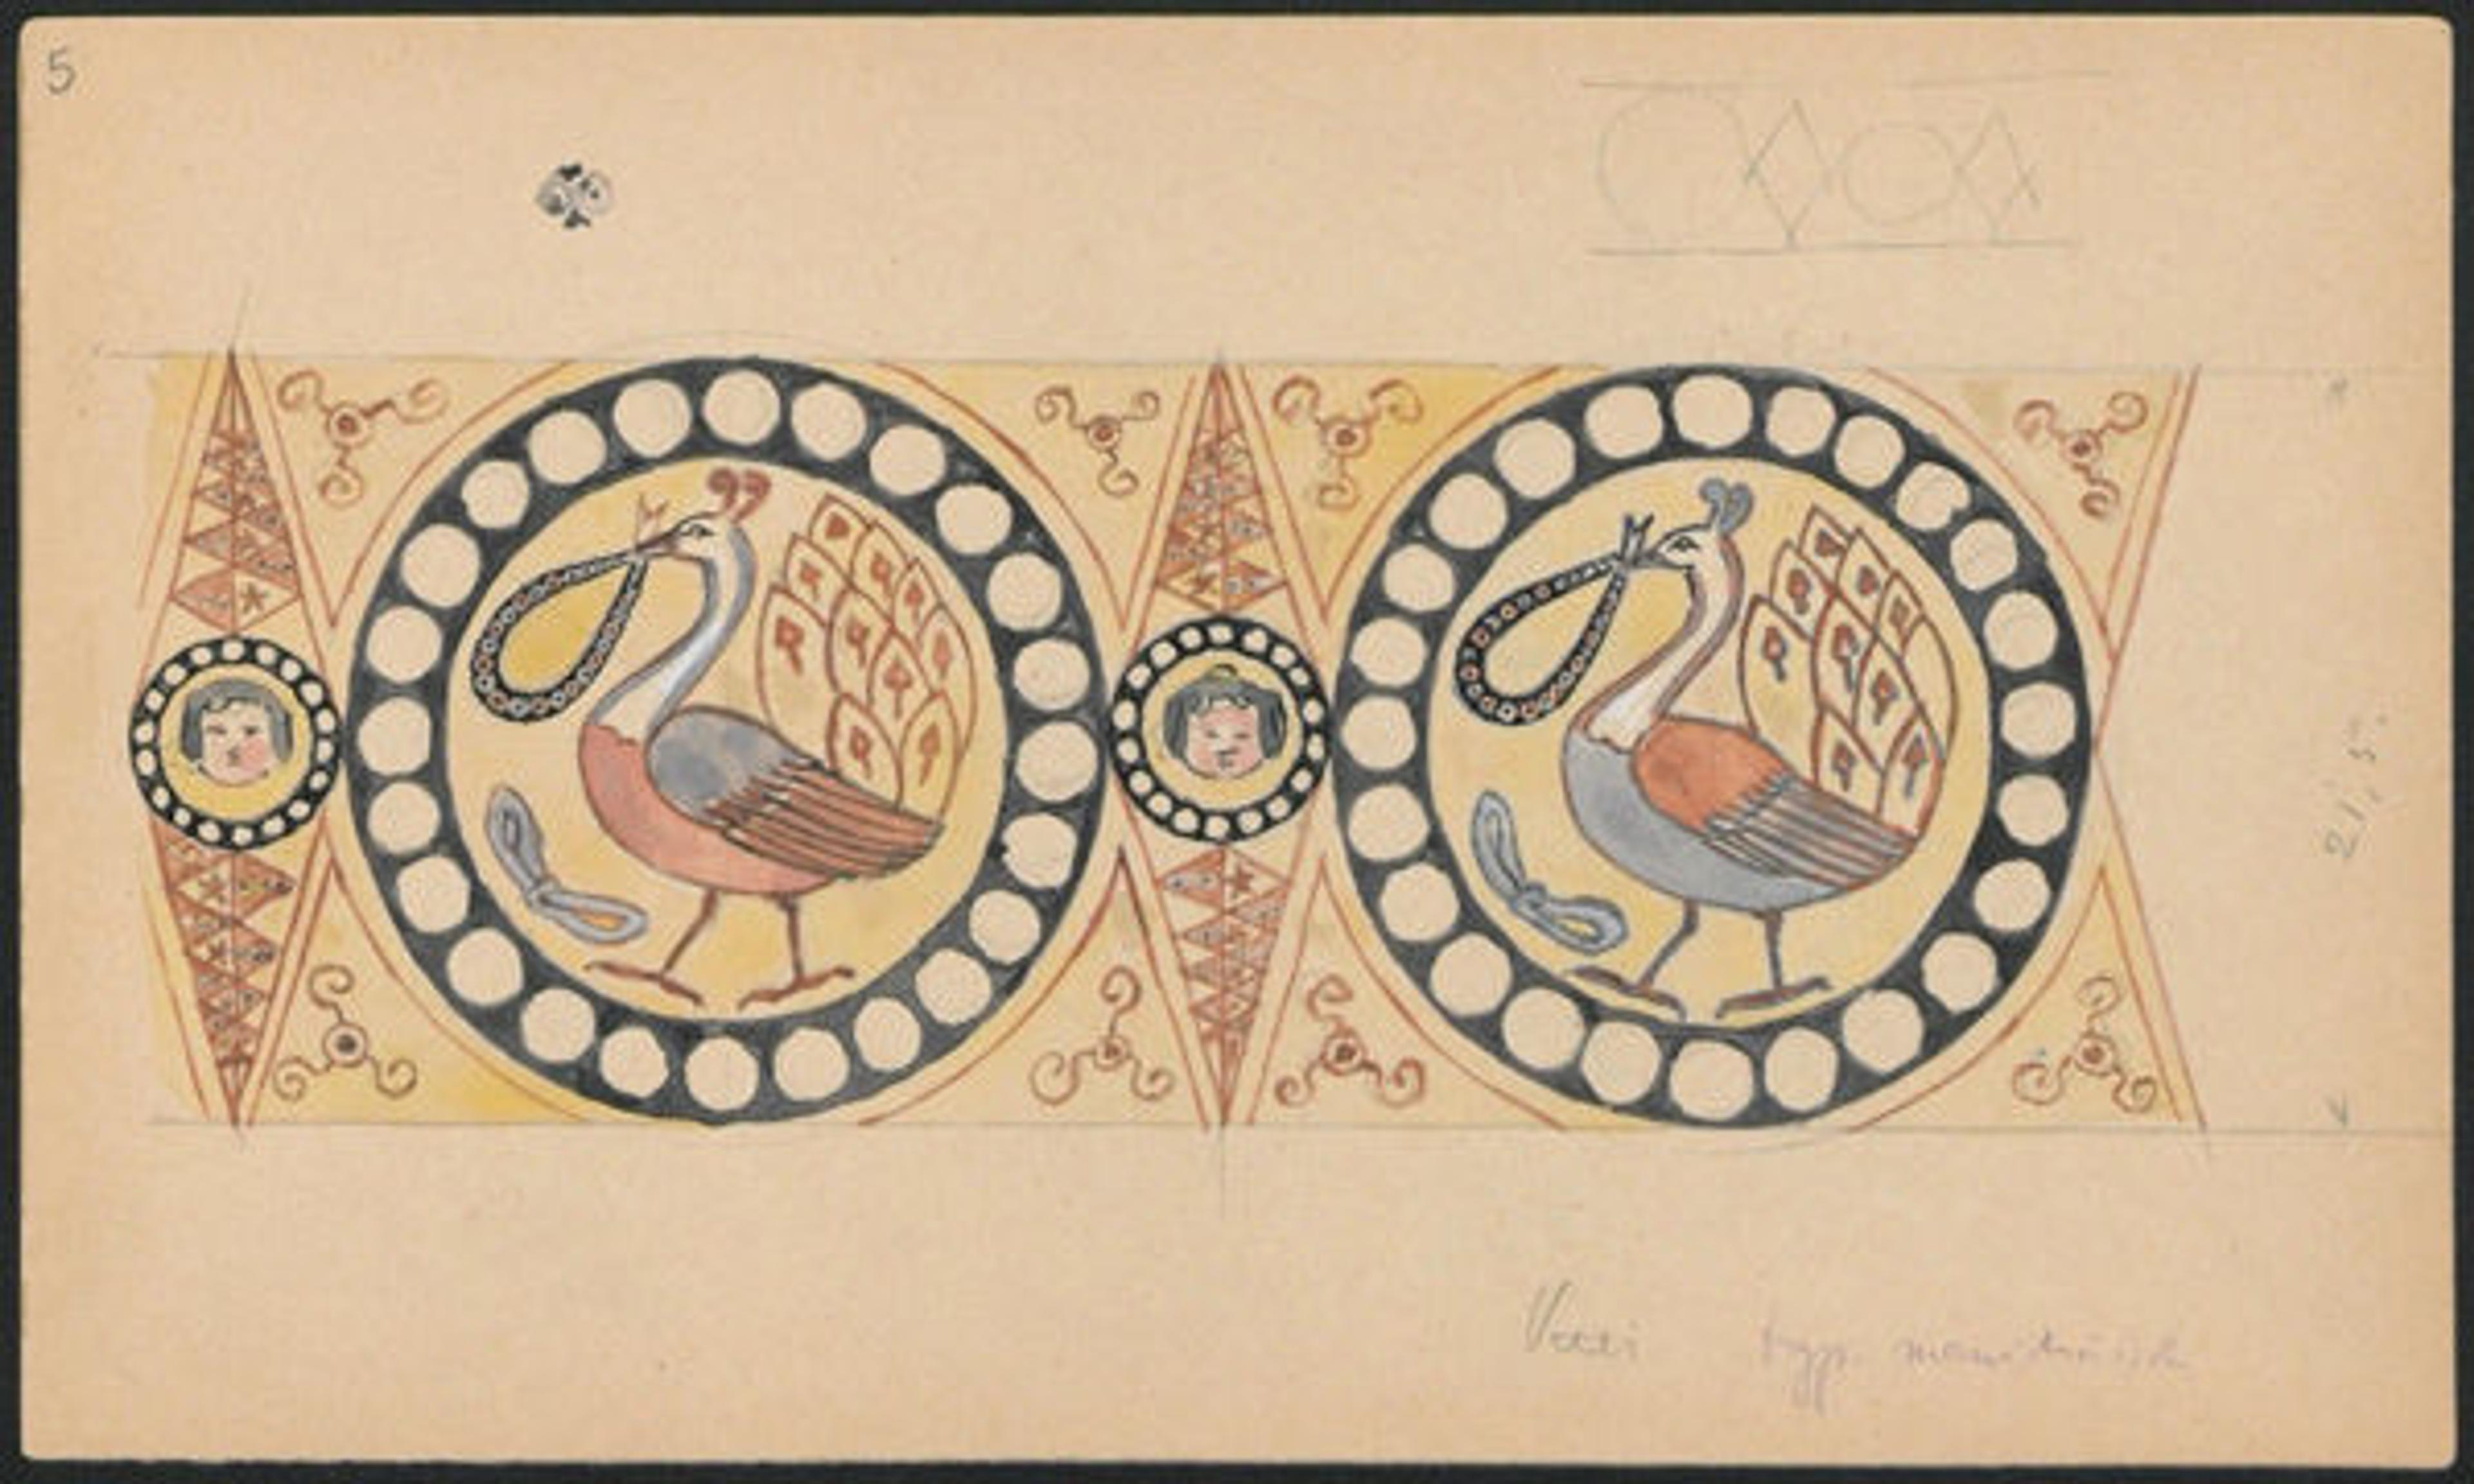 Sketchbook: pocket folder 2; page 5. Ernst Herzfeld Papers, The Metropolitan Museum of Art 